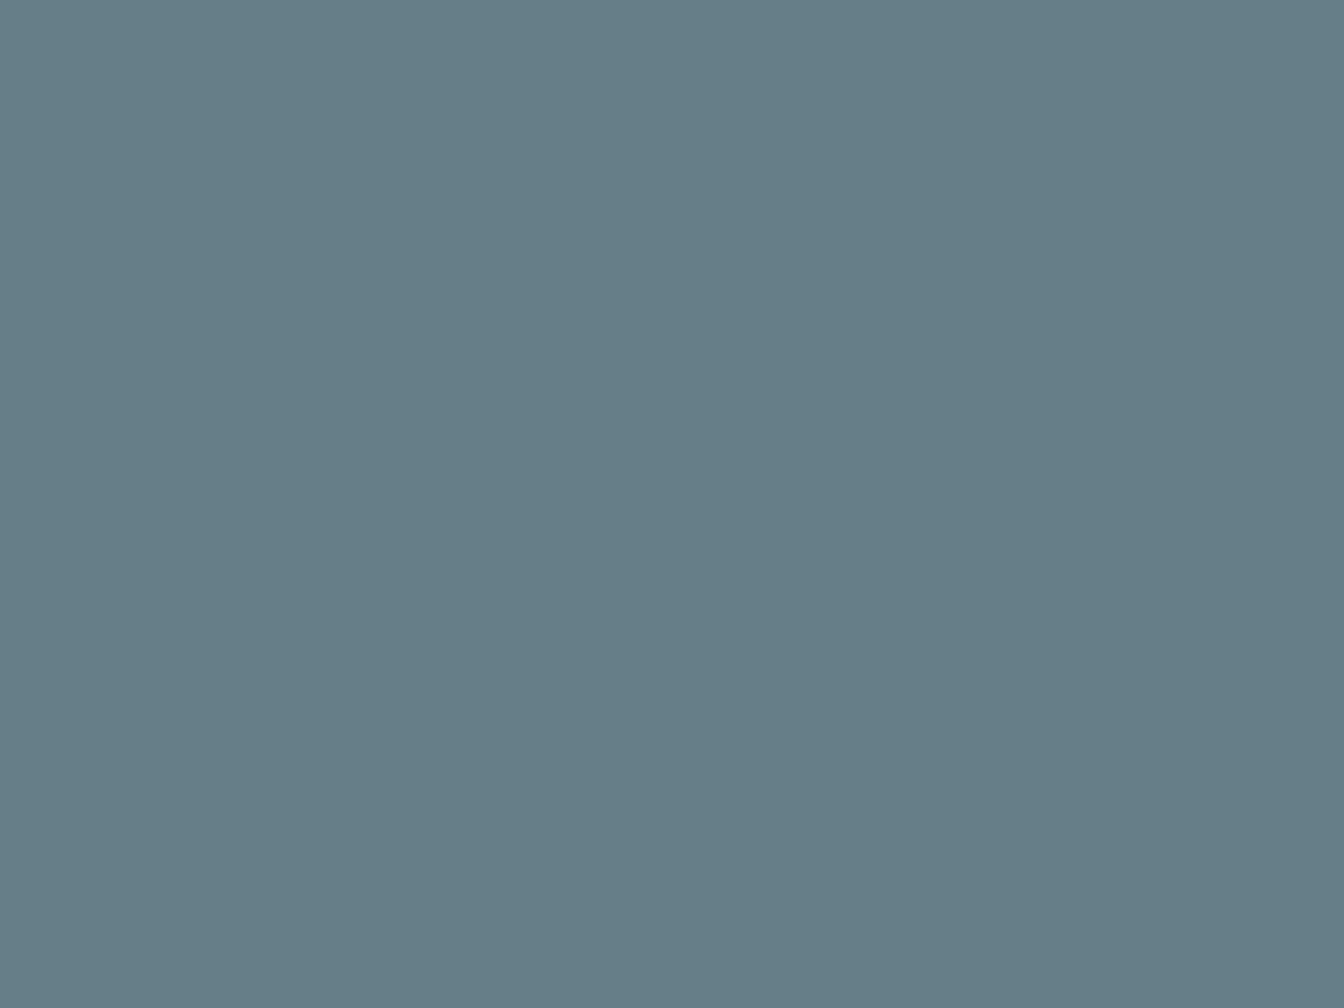 Феодосийская картинная галерея имени И.К. Айвазовского, Феодосия, Республика Крым. Фотография (фрагмент): Alexxx1979 / <a href="https://commons.wikimedia.org/w/index.php?curid=142981867" target="_blank" rel="noopener">Wikimedia Commons</a> / <a href="https://creativecommons.org/licenses/by-sa/4.0" target="_blank" rel="noopener">CC BY-SA 4.0</a>